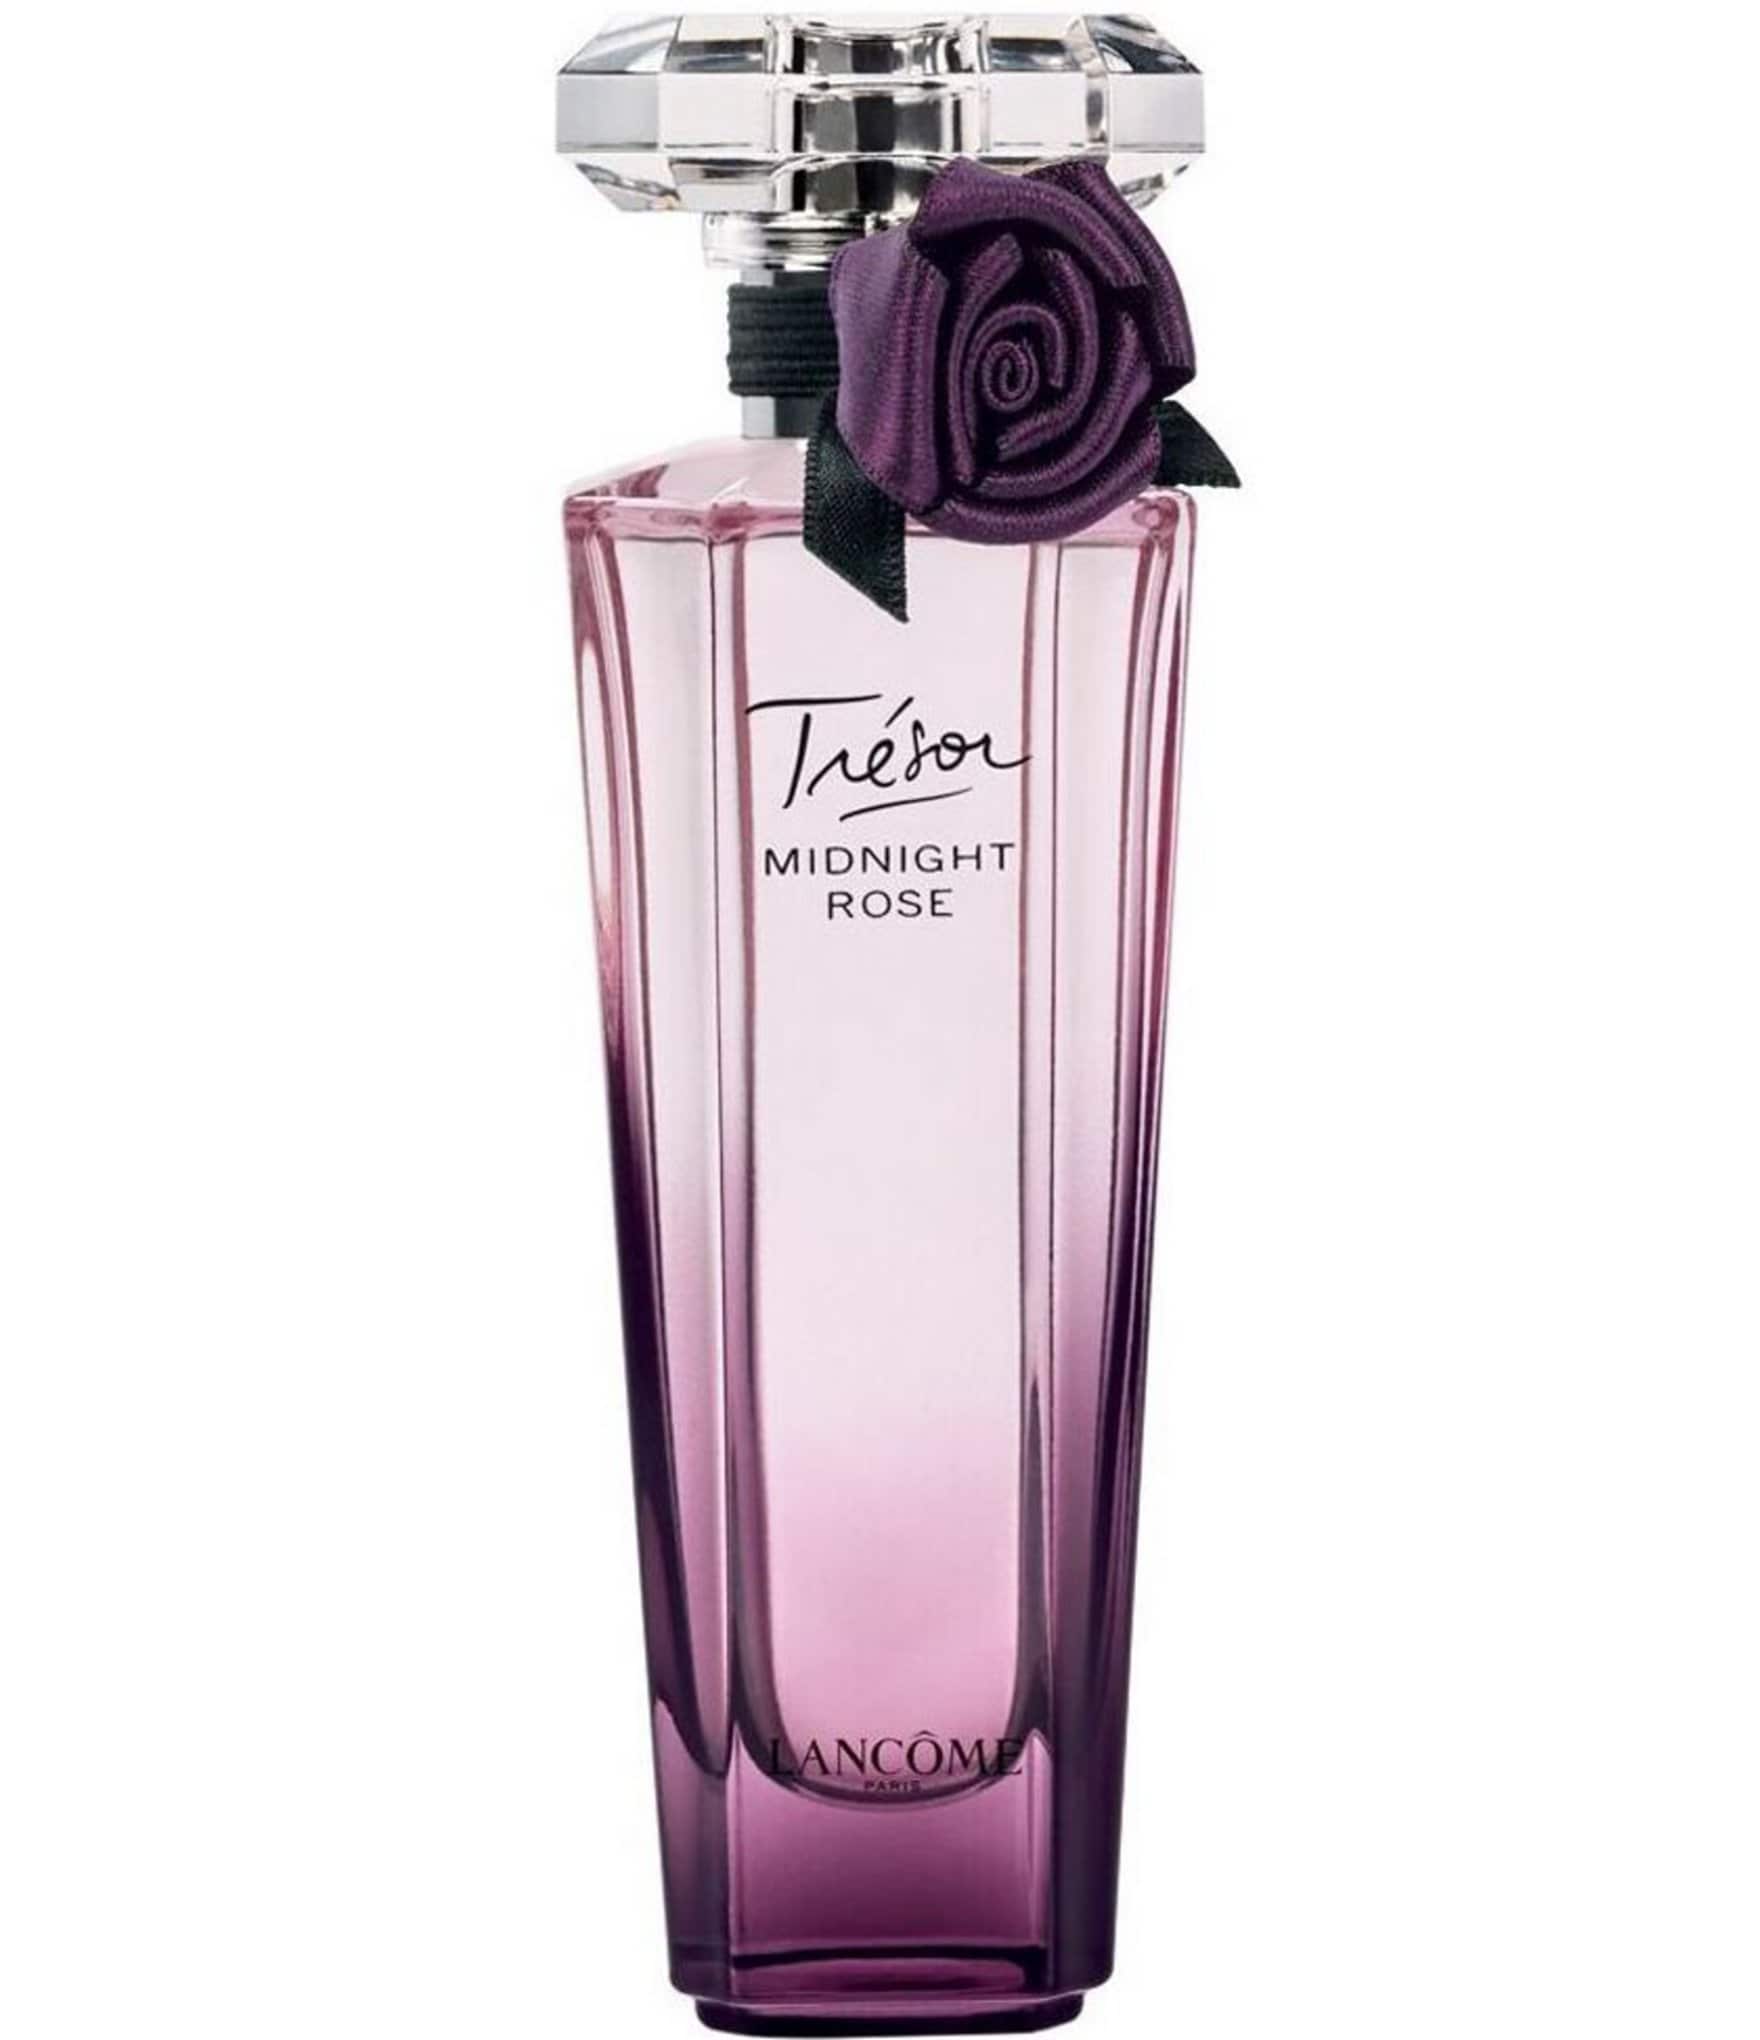  Tresor Midnight Rose Perfume